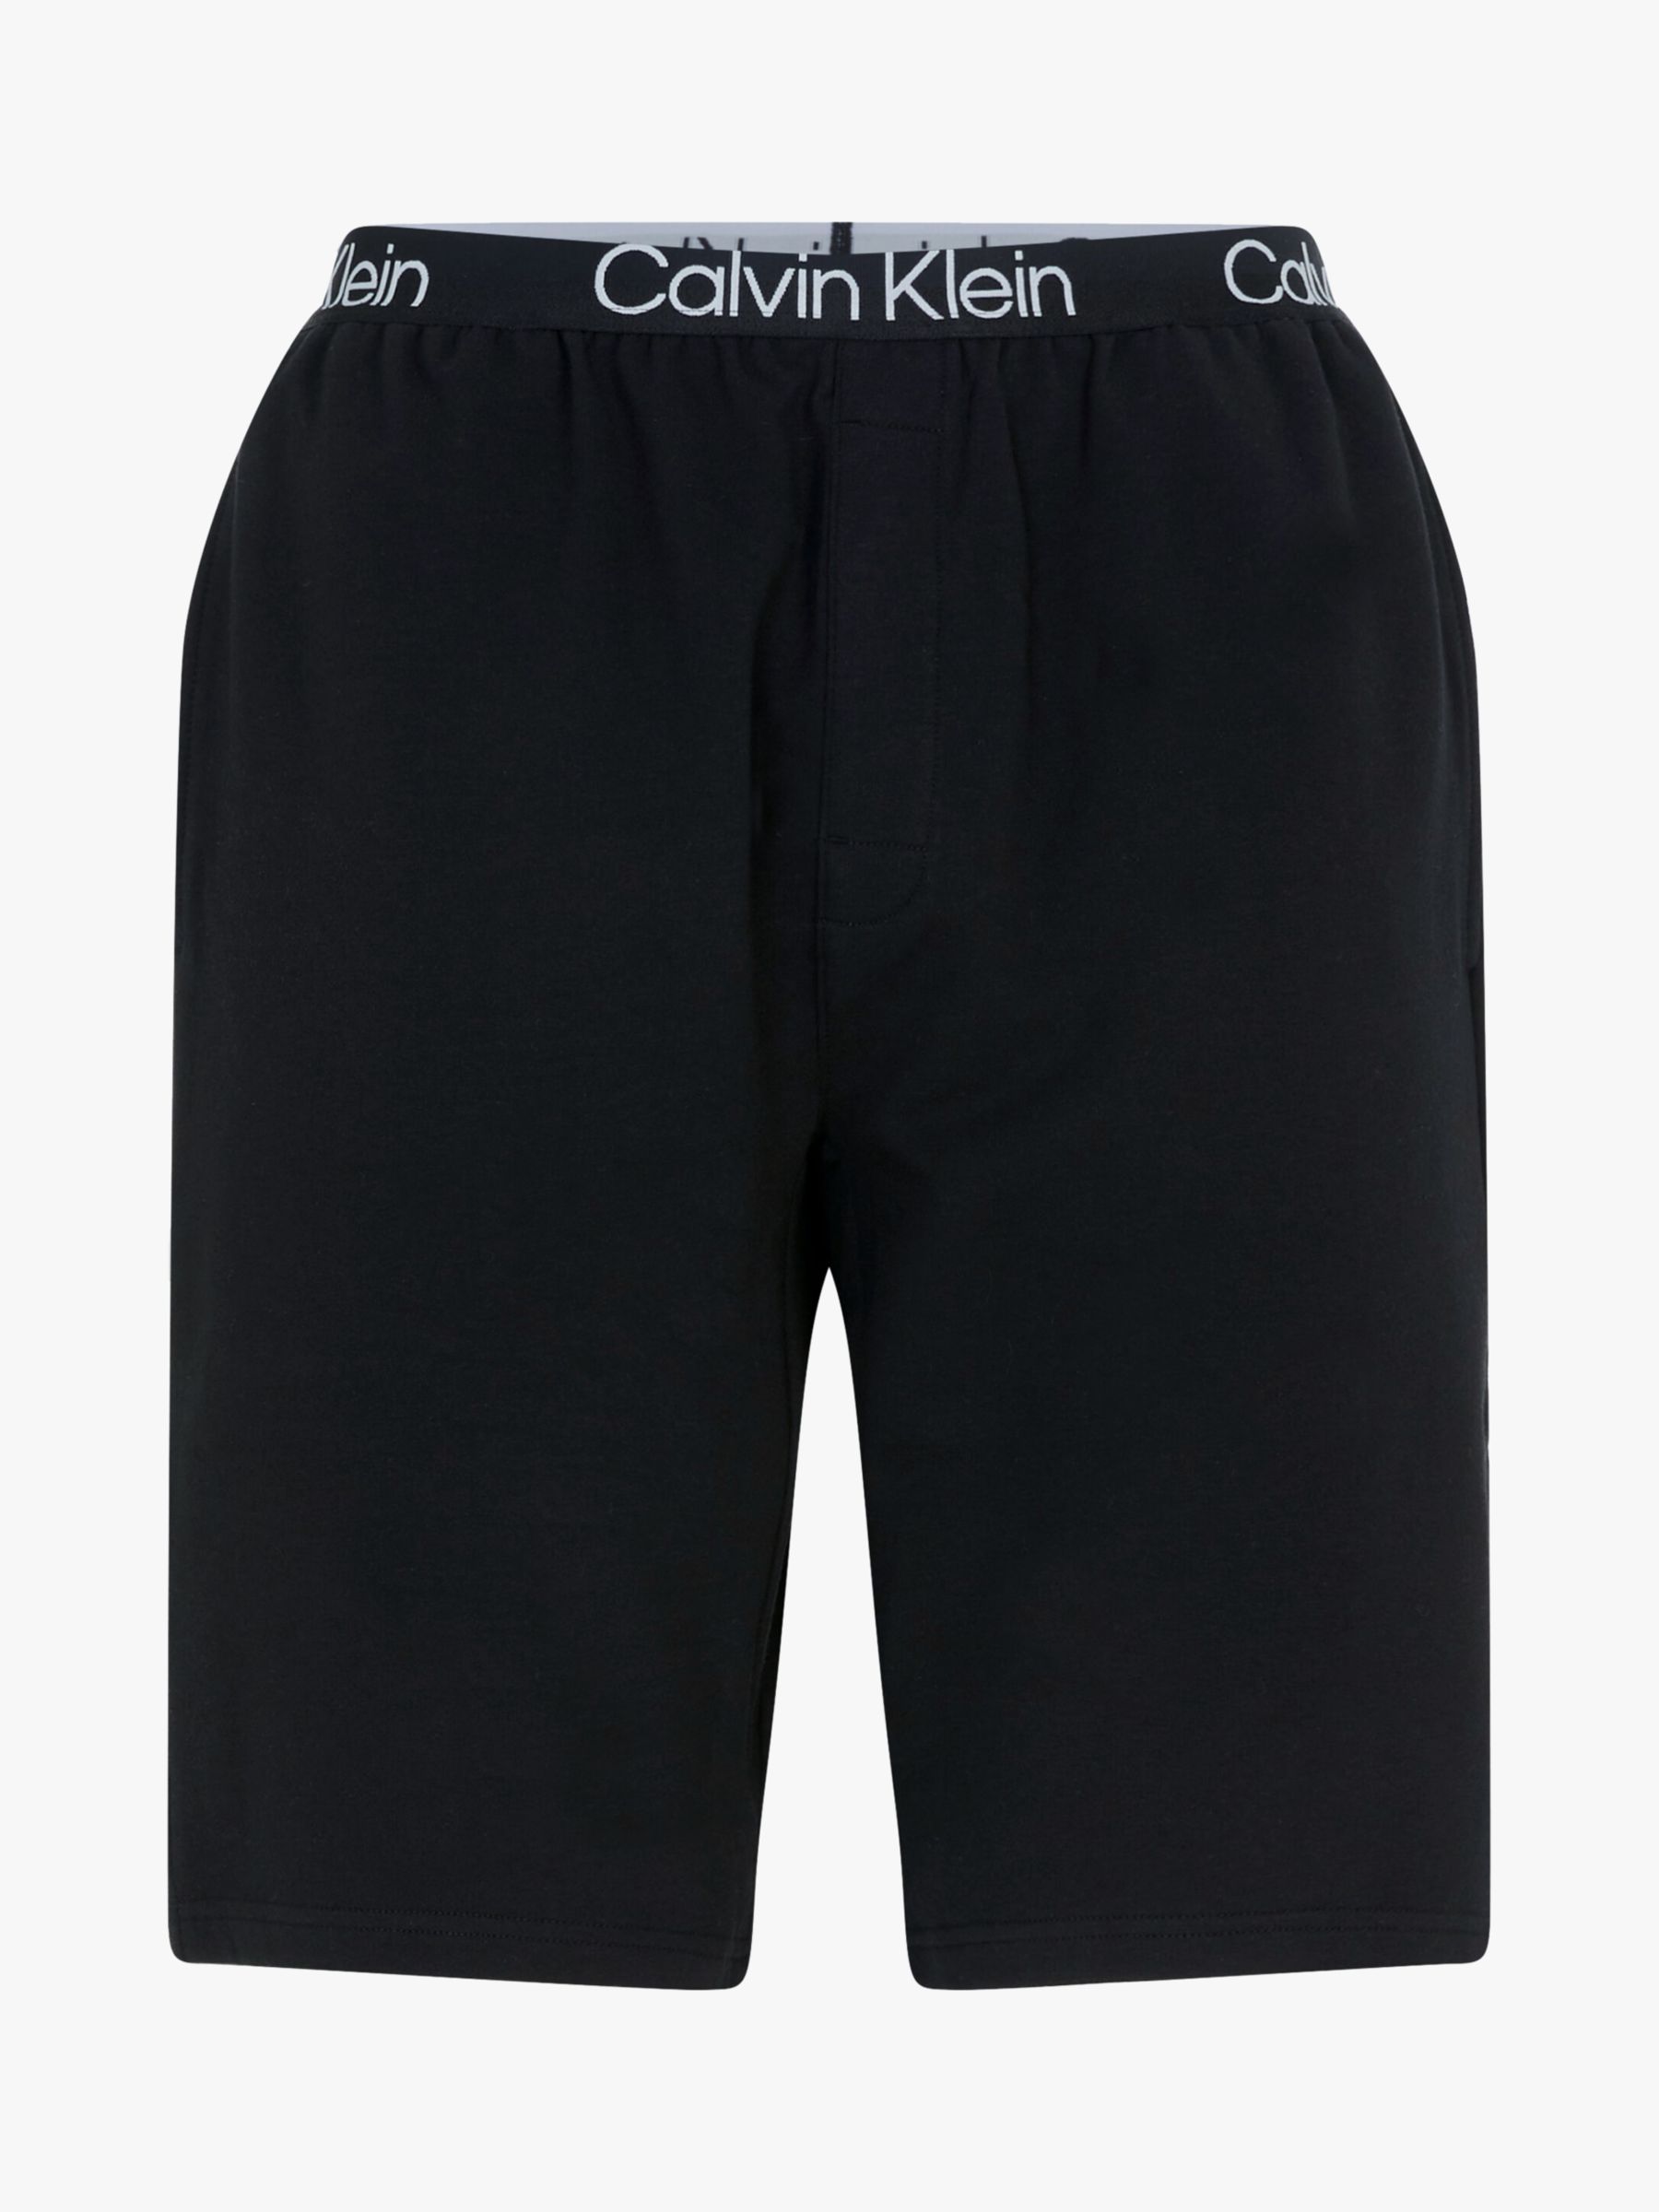 Calvin Klein Sleep Lounge Shorts, Black